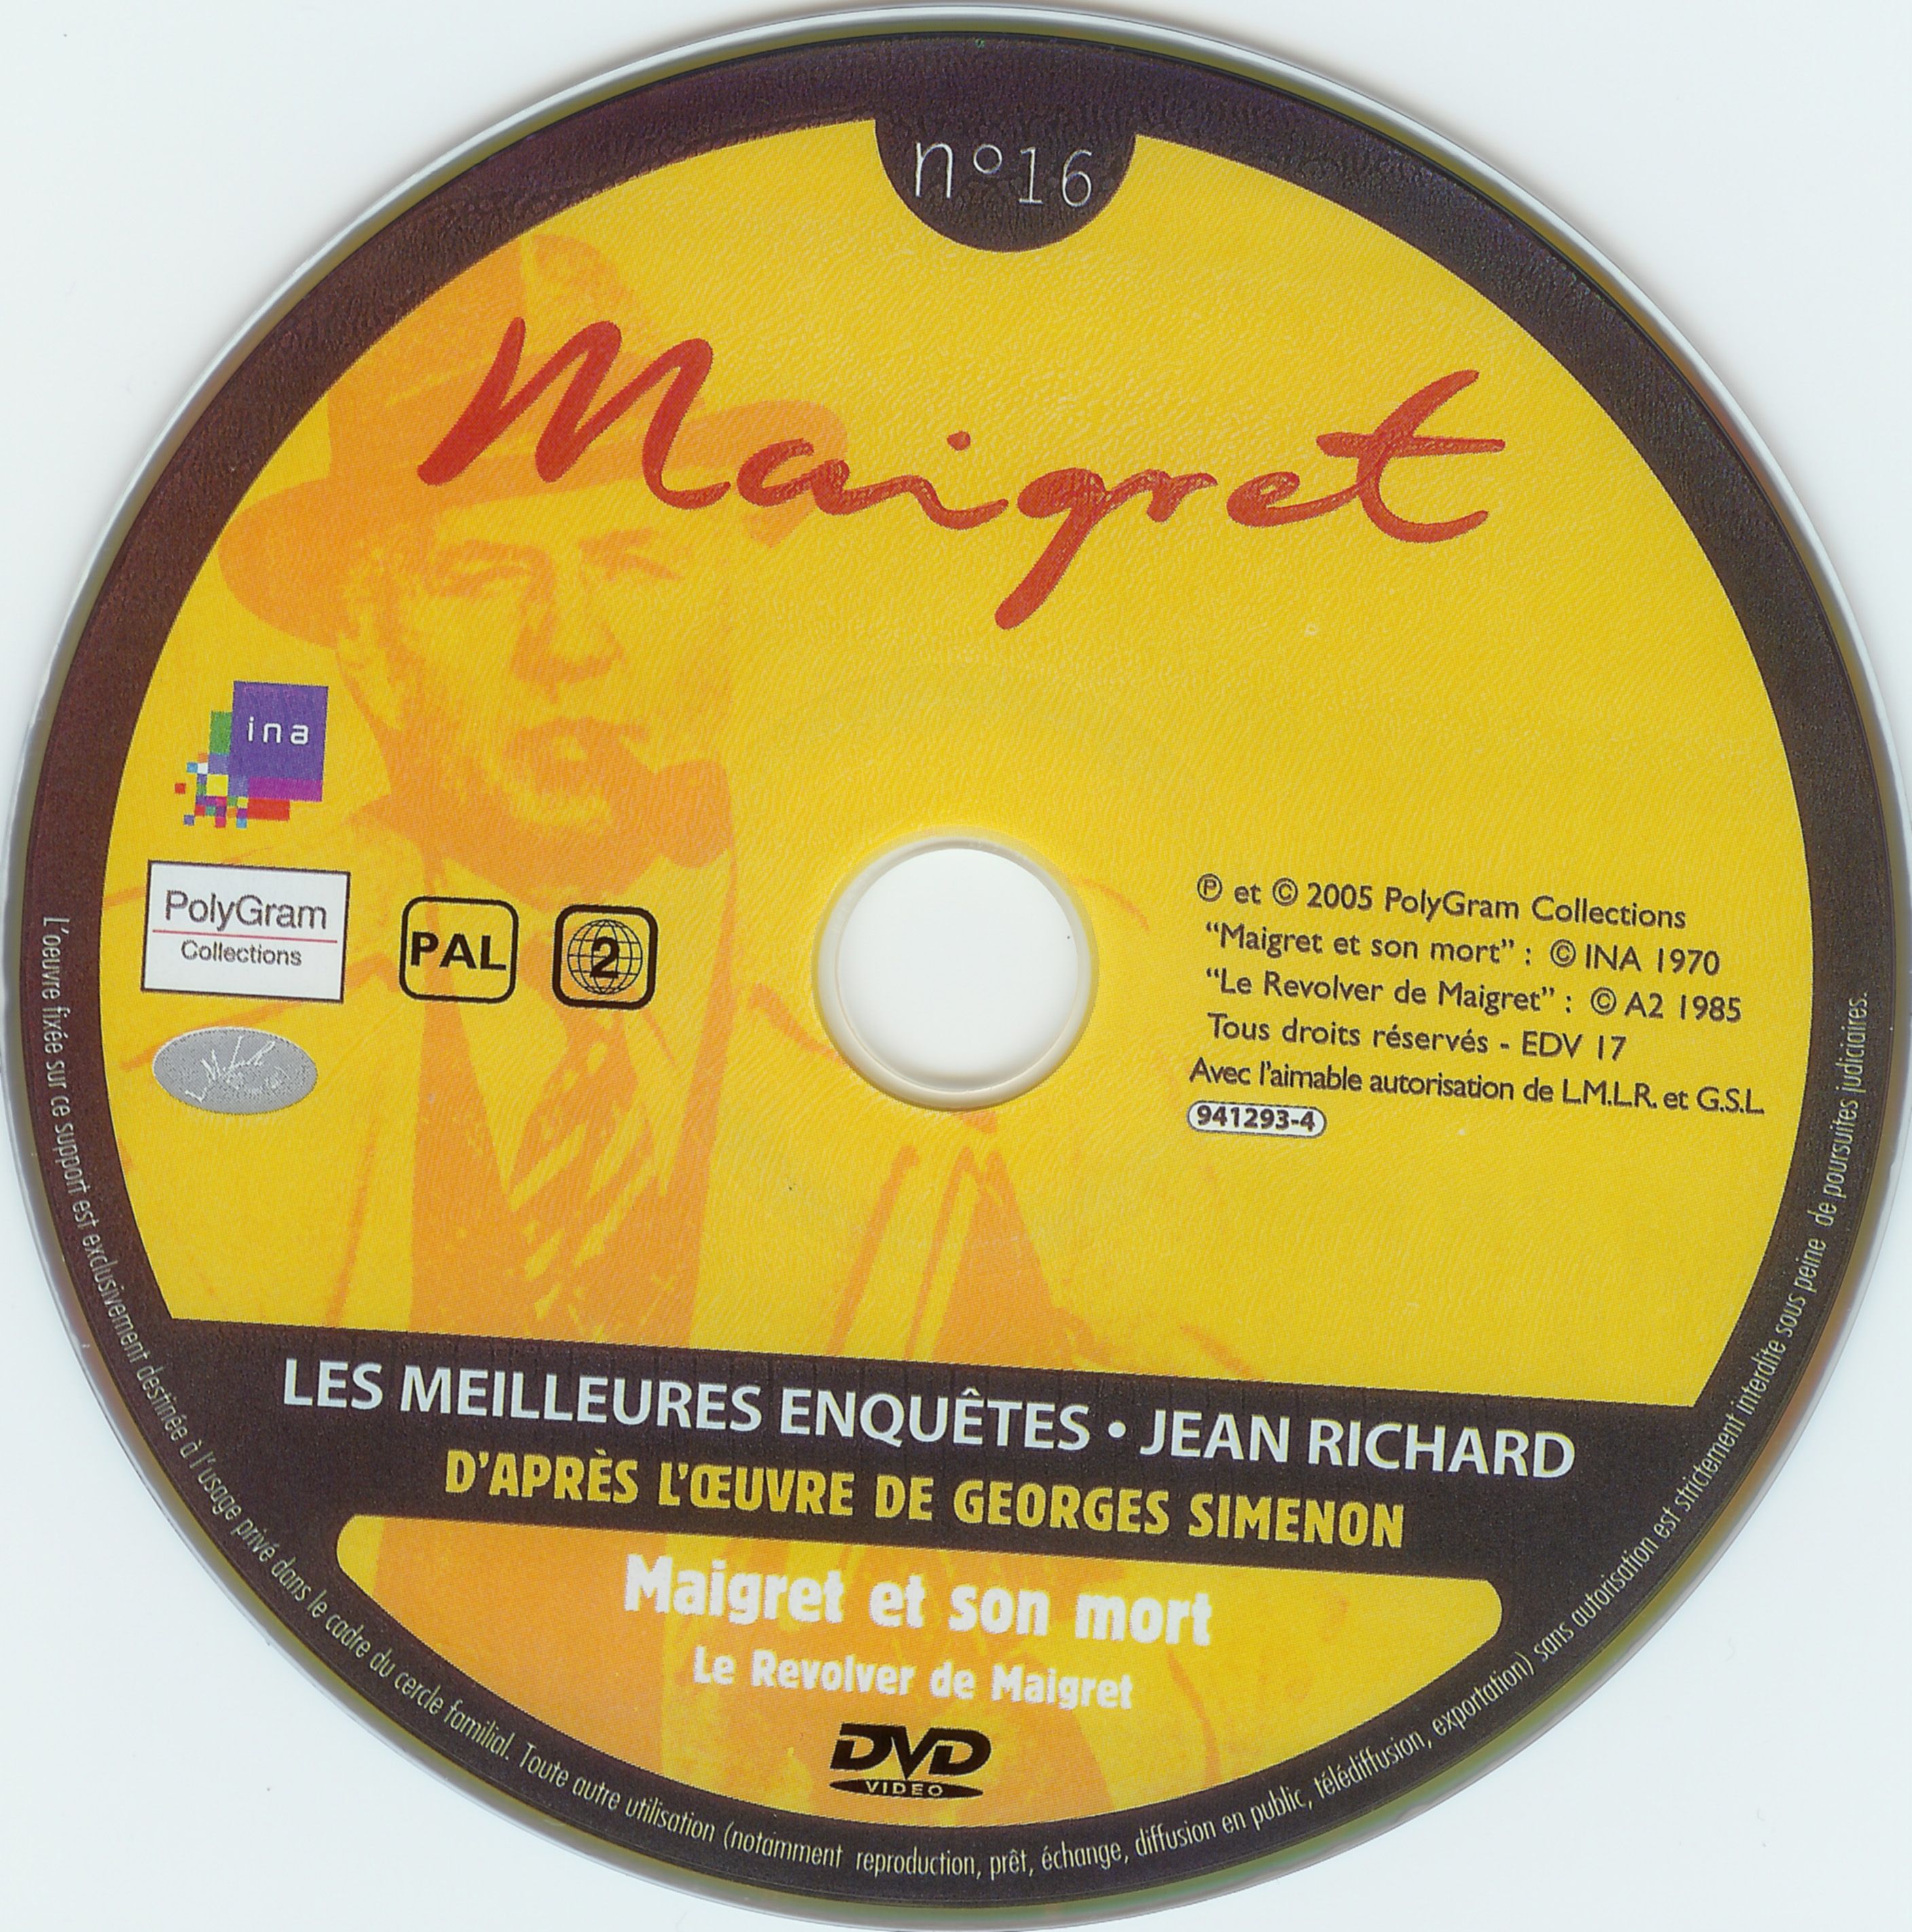 Maigret (Jean Richard) vol 16